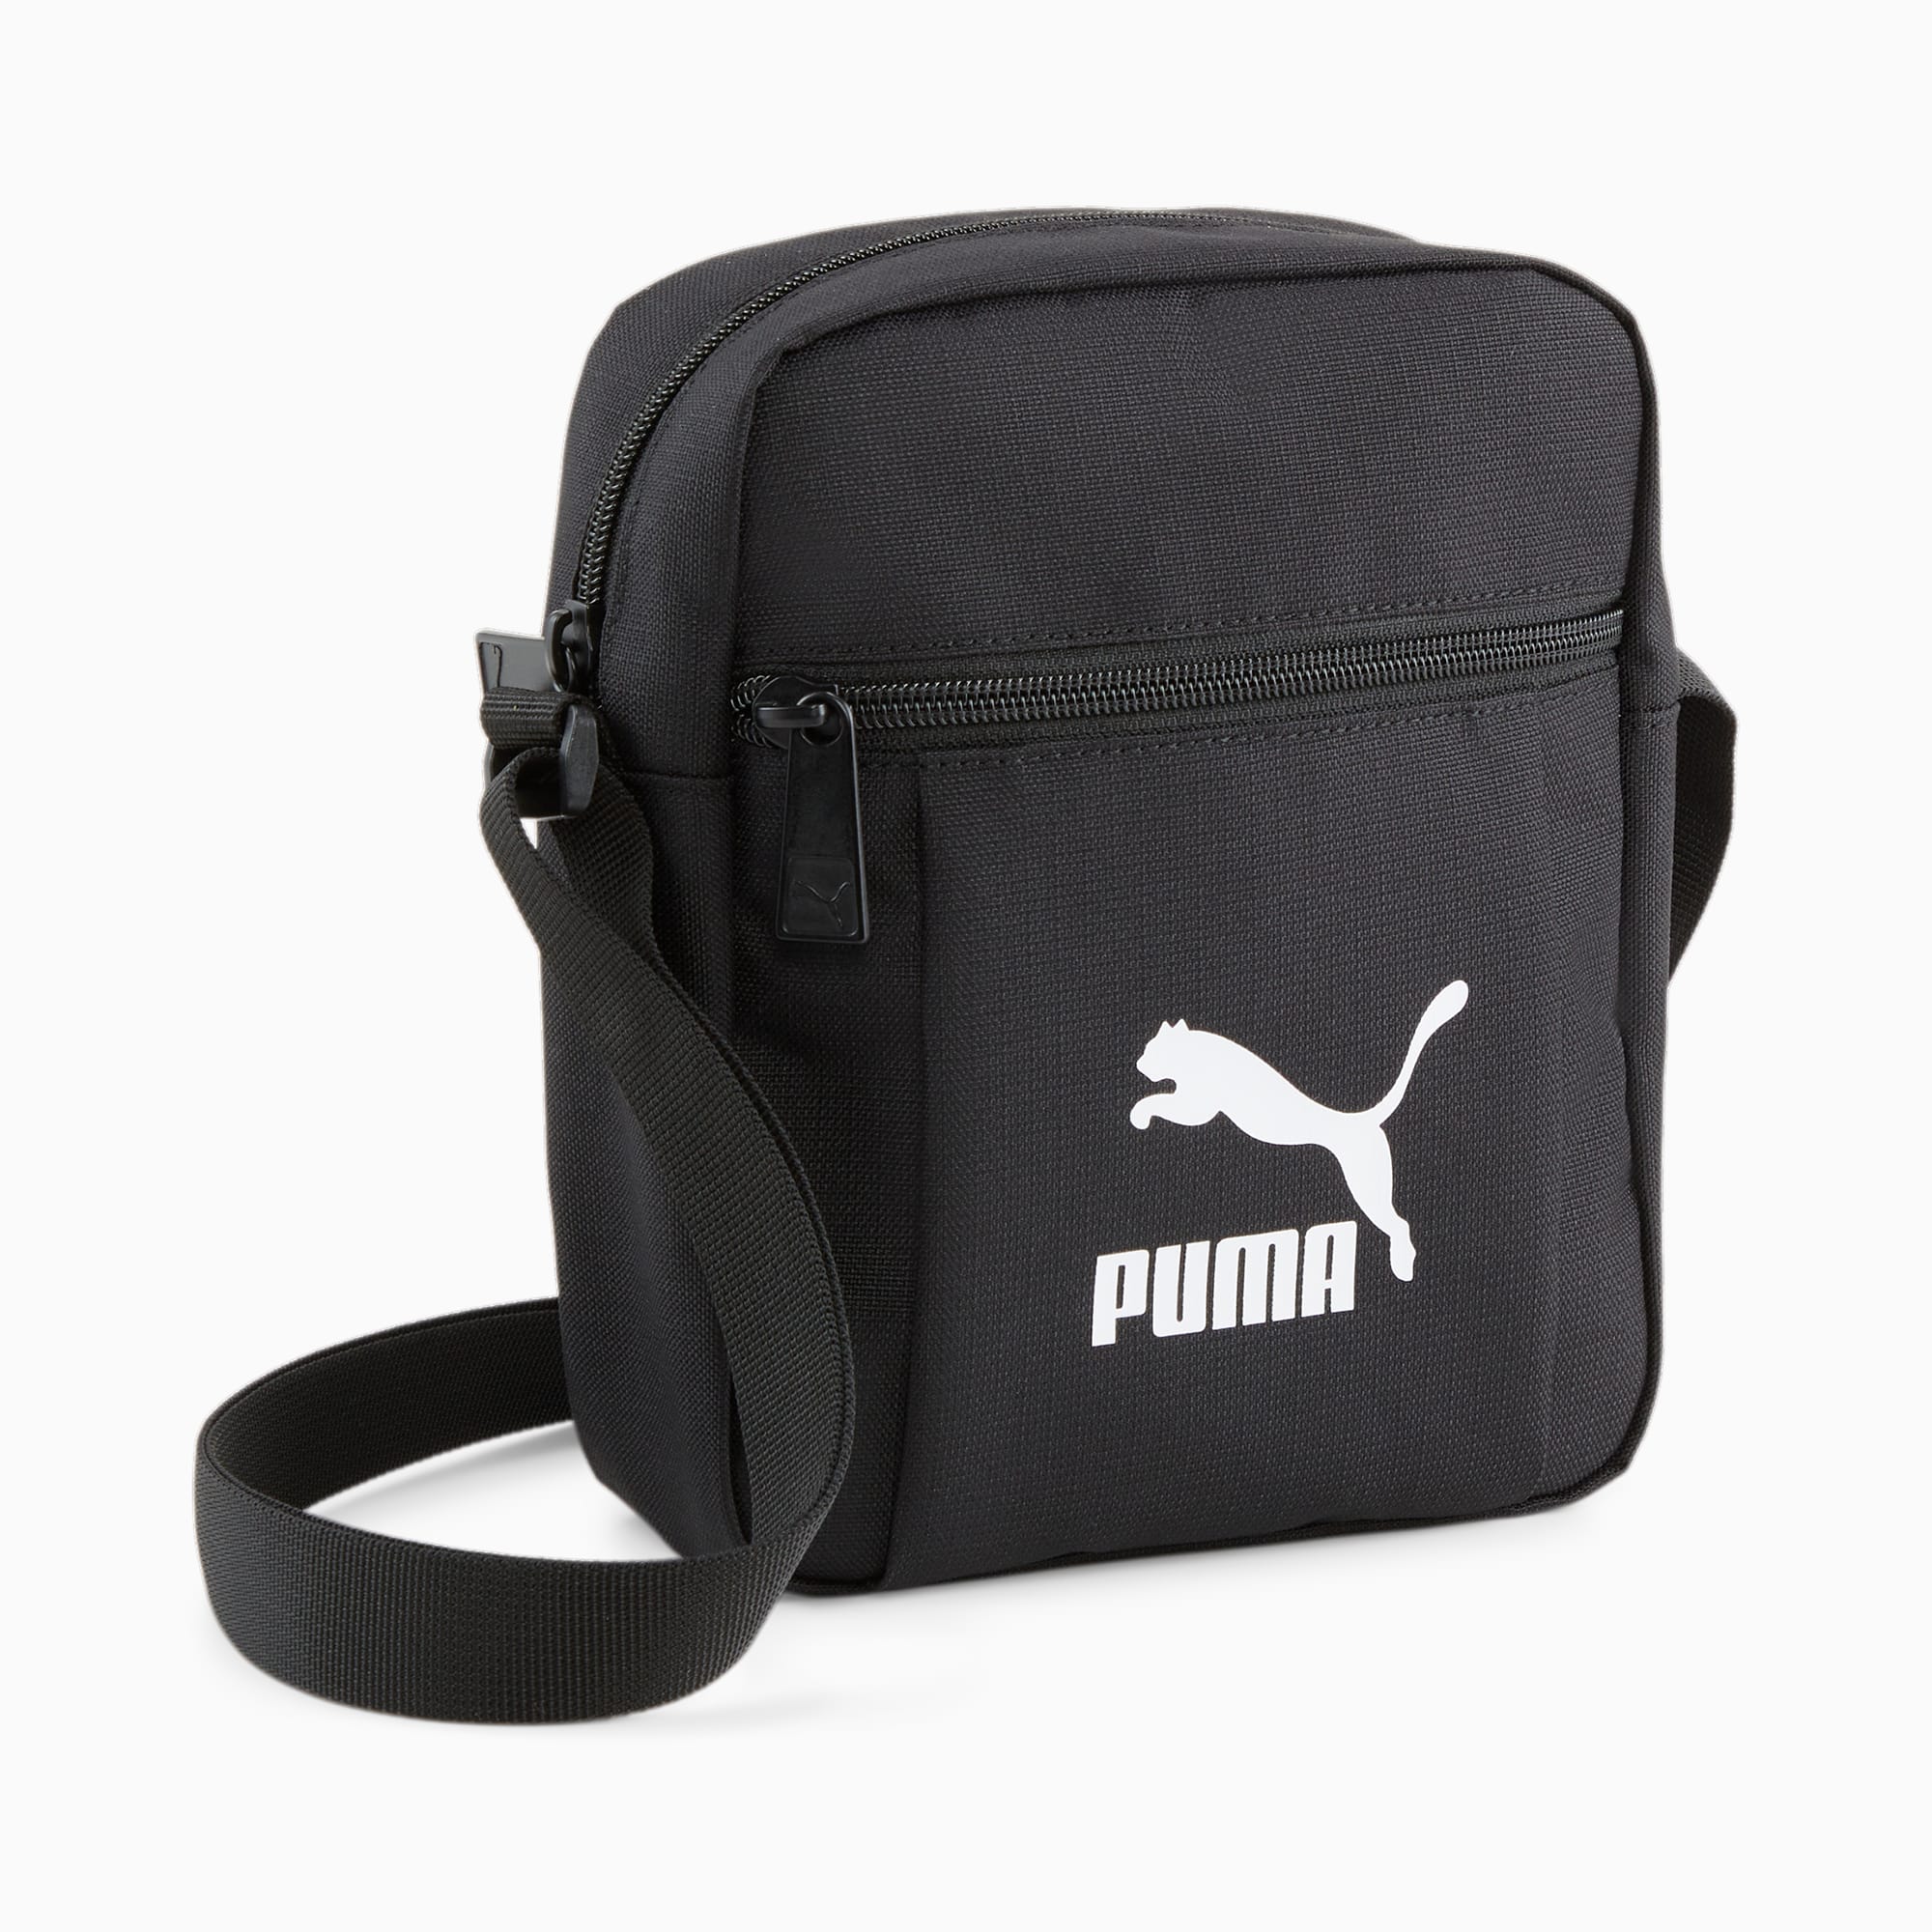 Puma Classics Archive Compact Portable Siyah Omuz Çantası (079982-01)